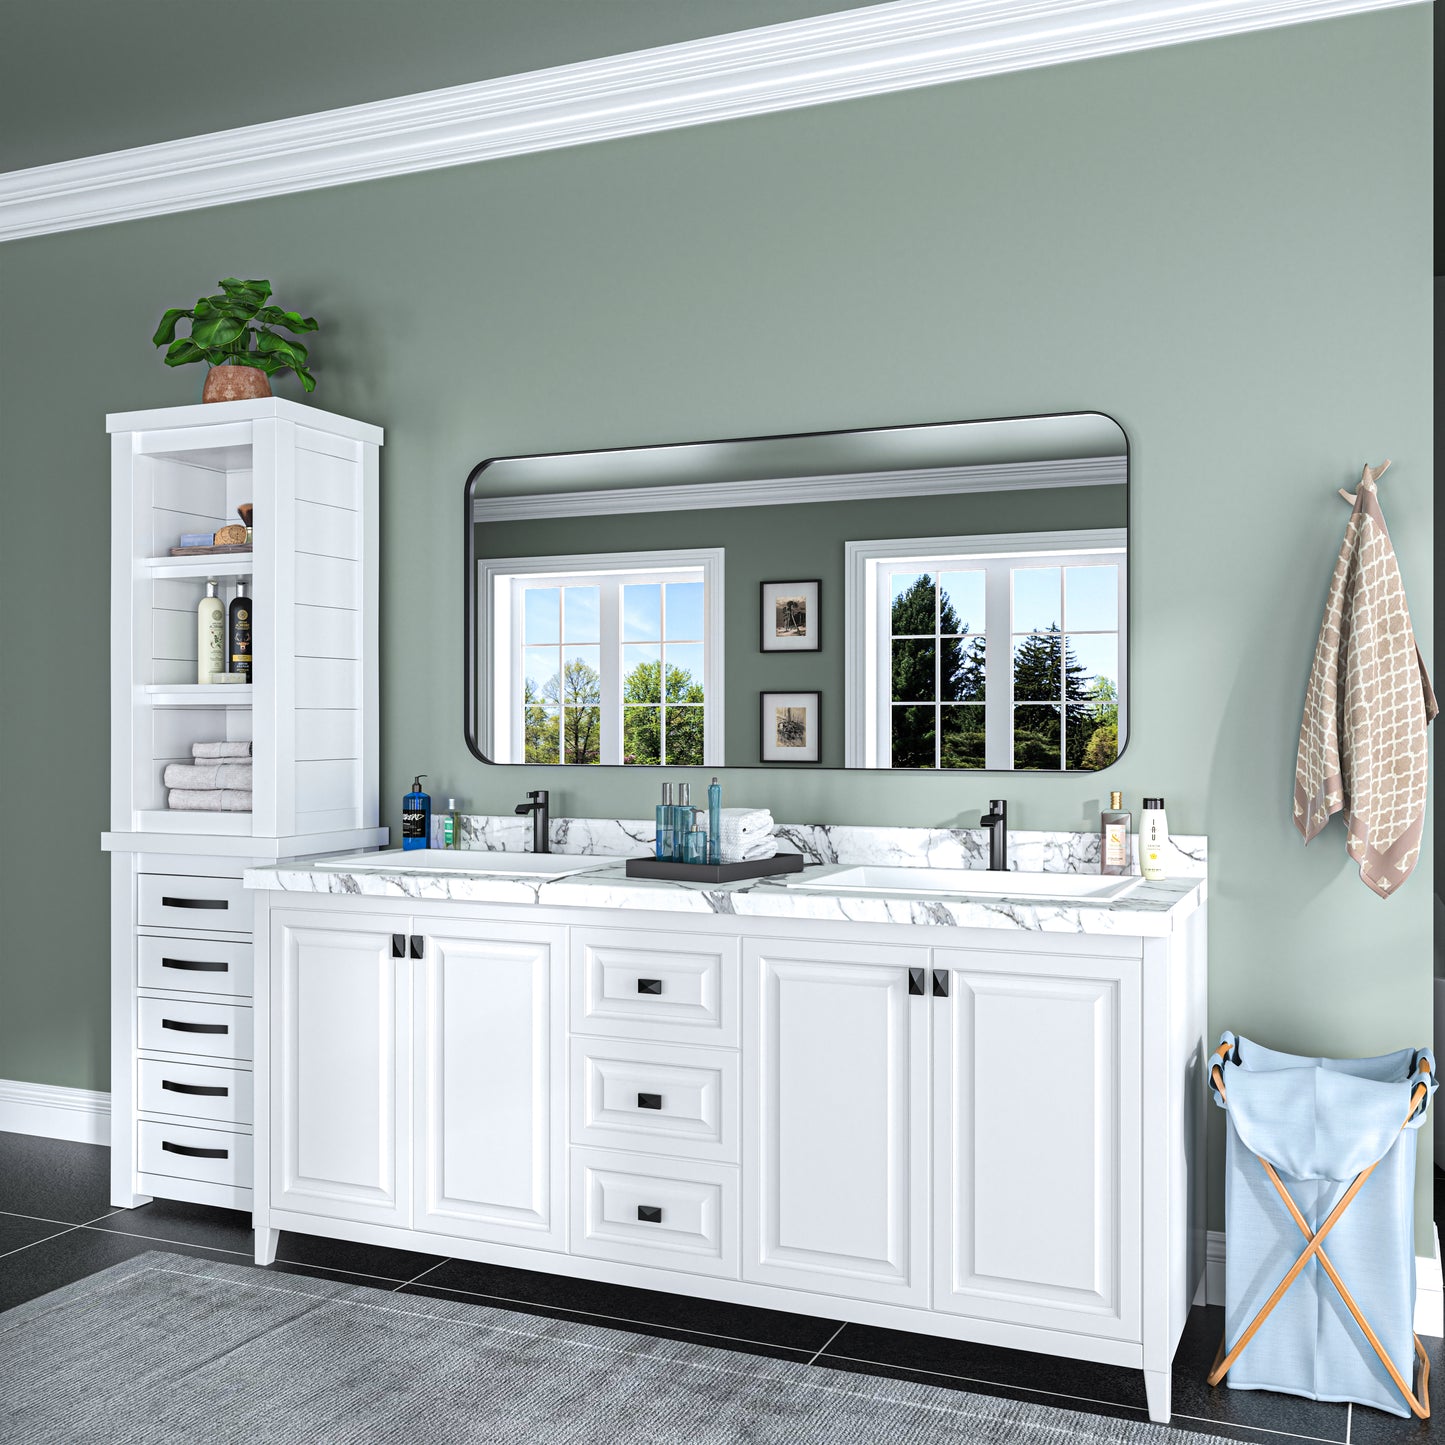 Waterpar® 60 in. W x 28 in. H Rectangular Aluminum Framed Wall Bathroom Vanity Mirror